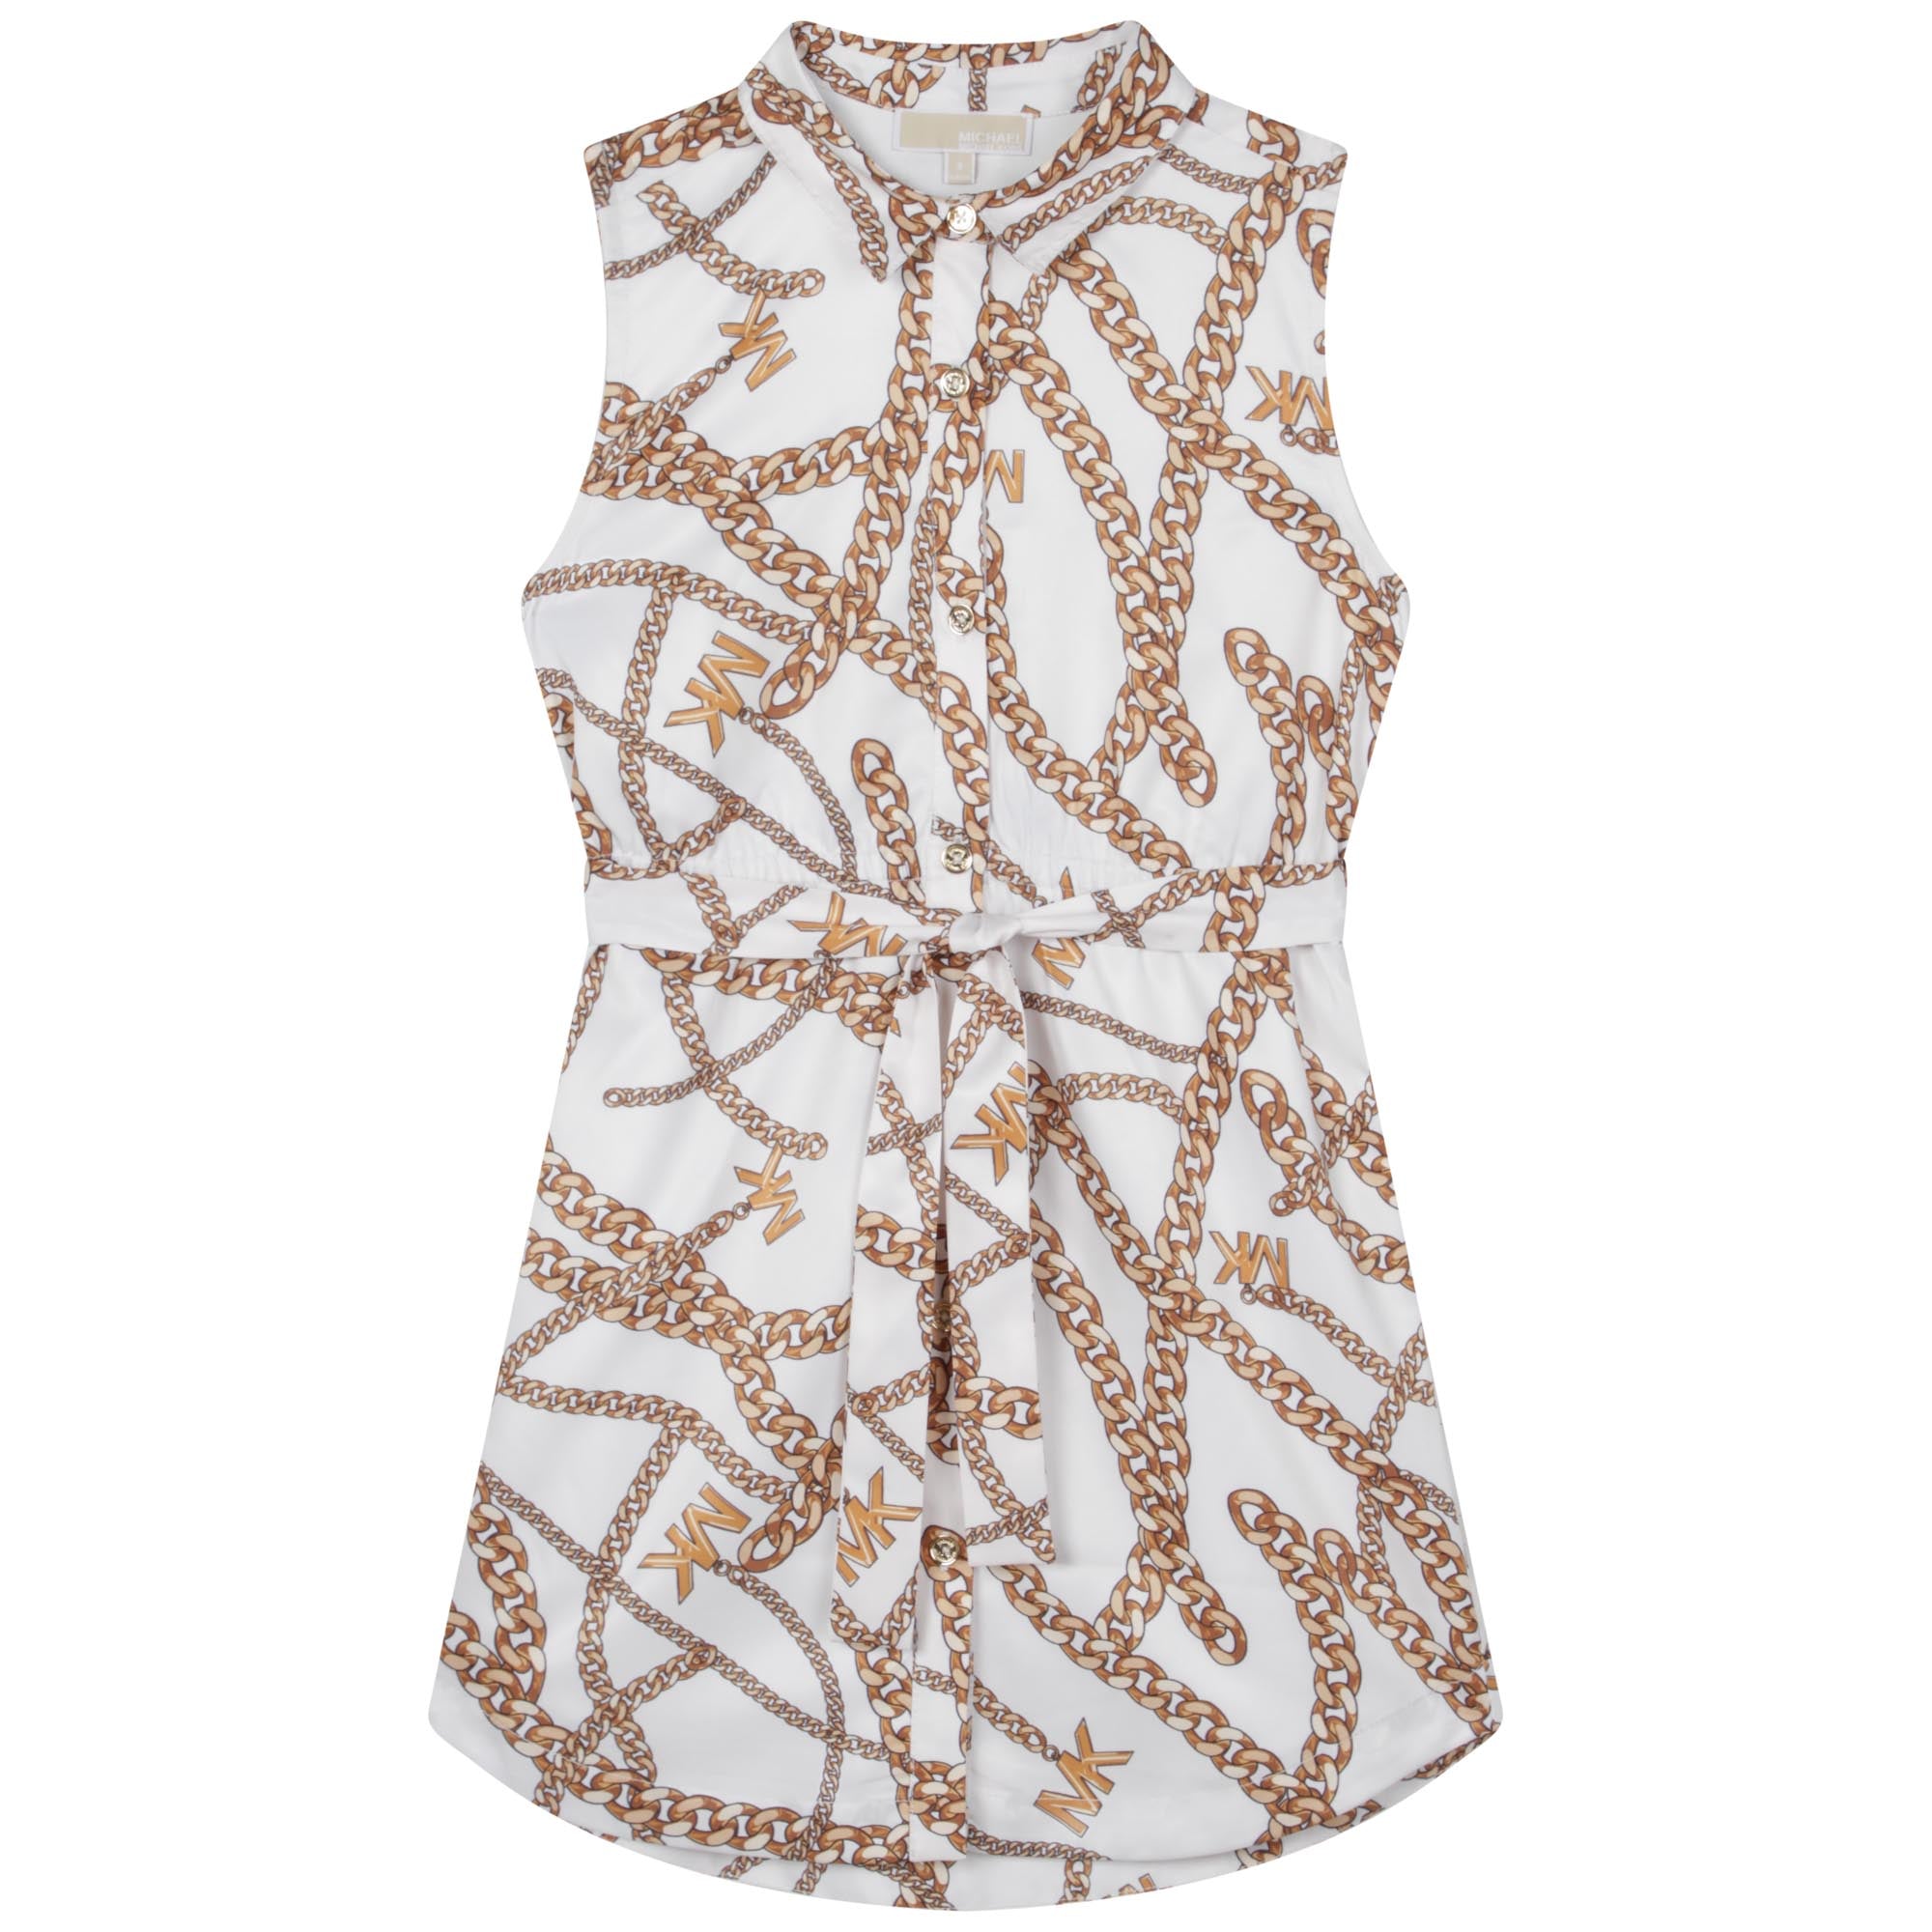 Michael Kors Chain Dress